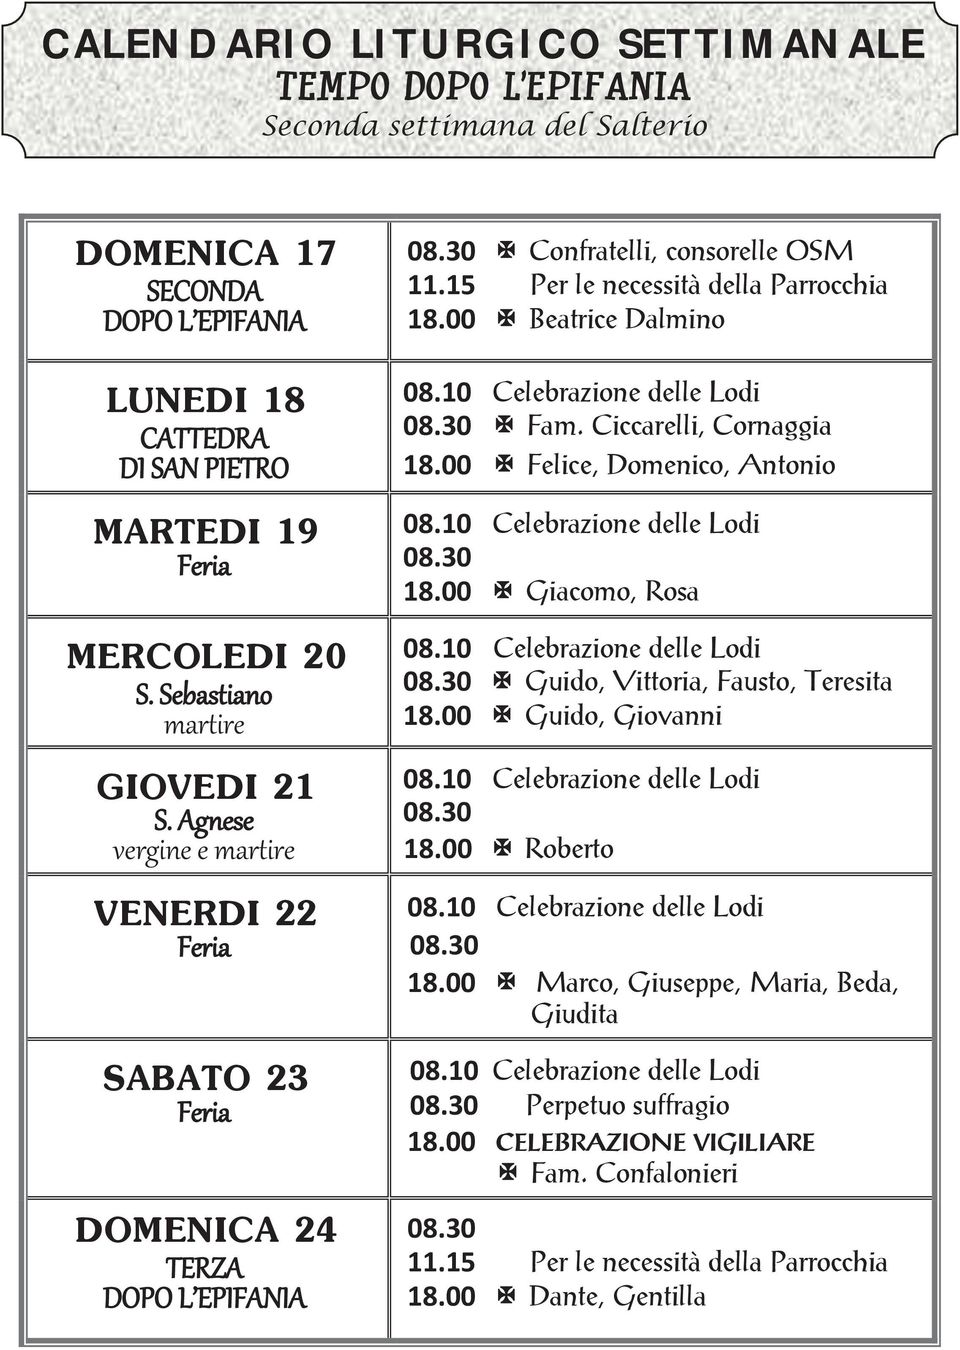 00 Giacomo, Rosa MERCOLEDI 20 GIOVEDI 21 Guido, Vittoria, Fausto, Teresita 18.00 Guido, Giovanni 18.00 Roberto VENERDI 22 18.